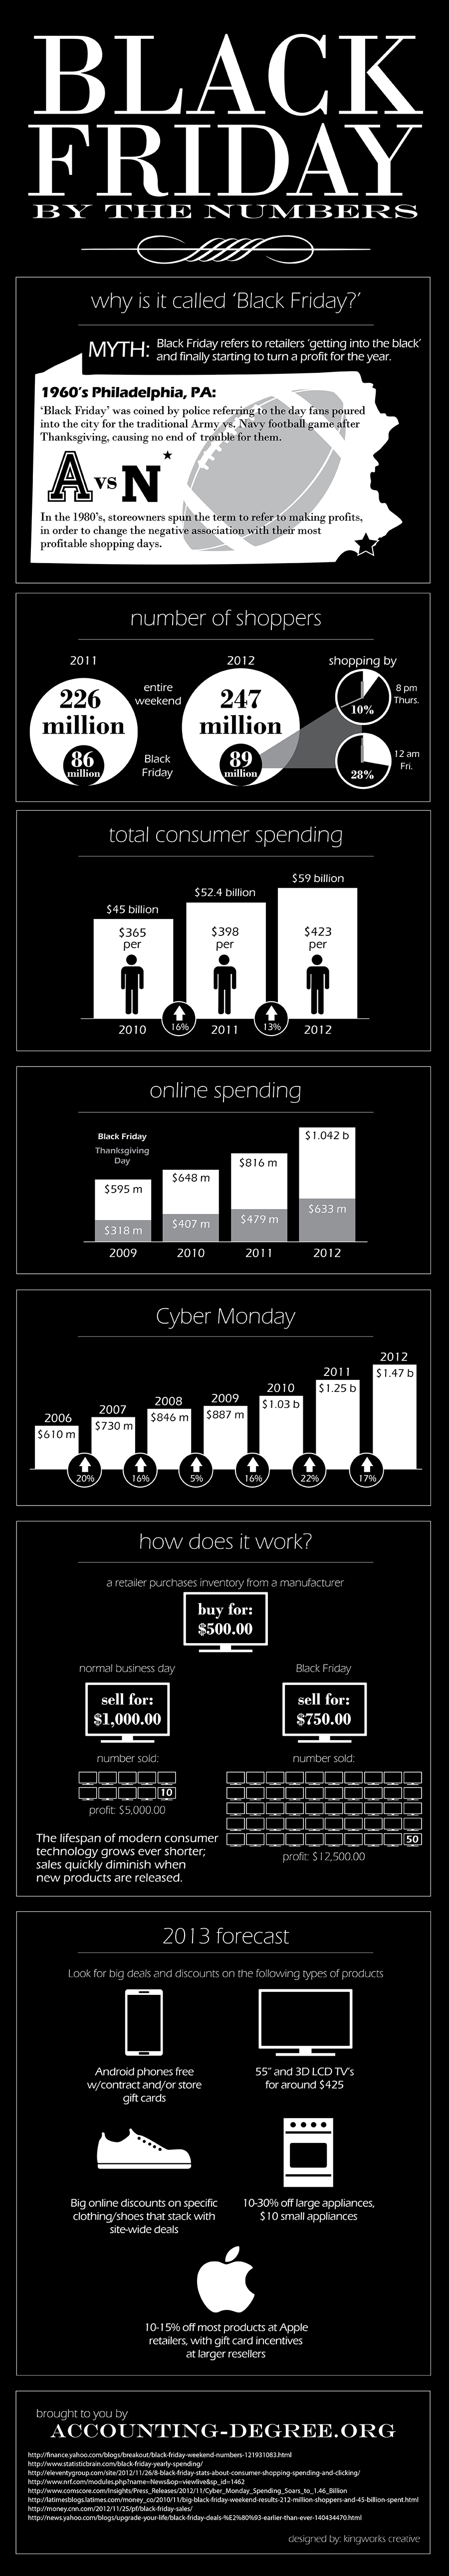 Black Friday Spending Trends-Infographic